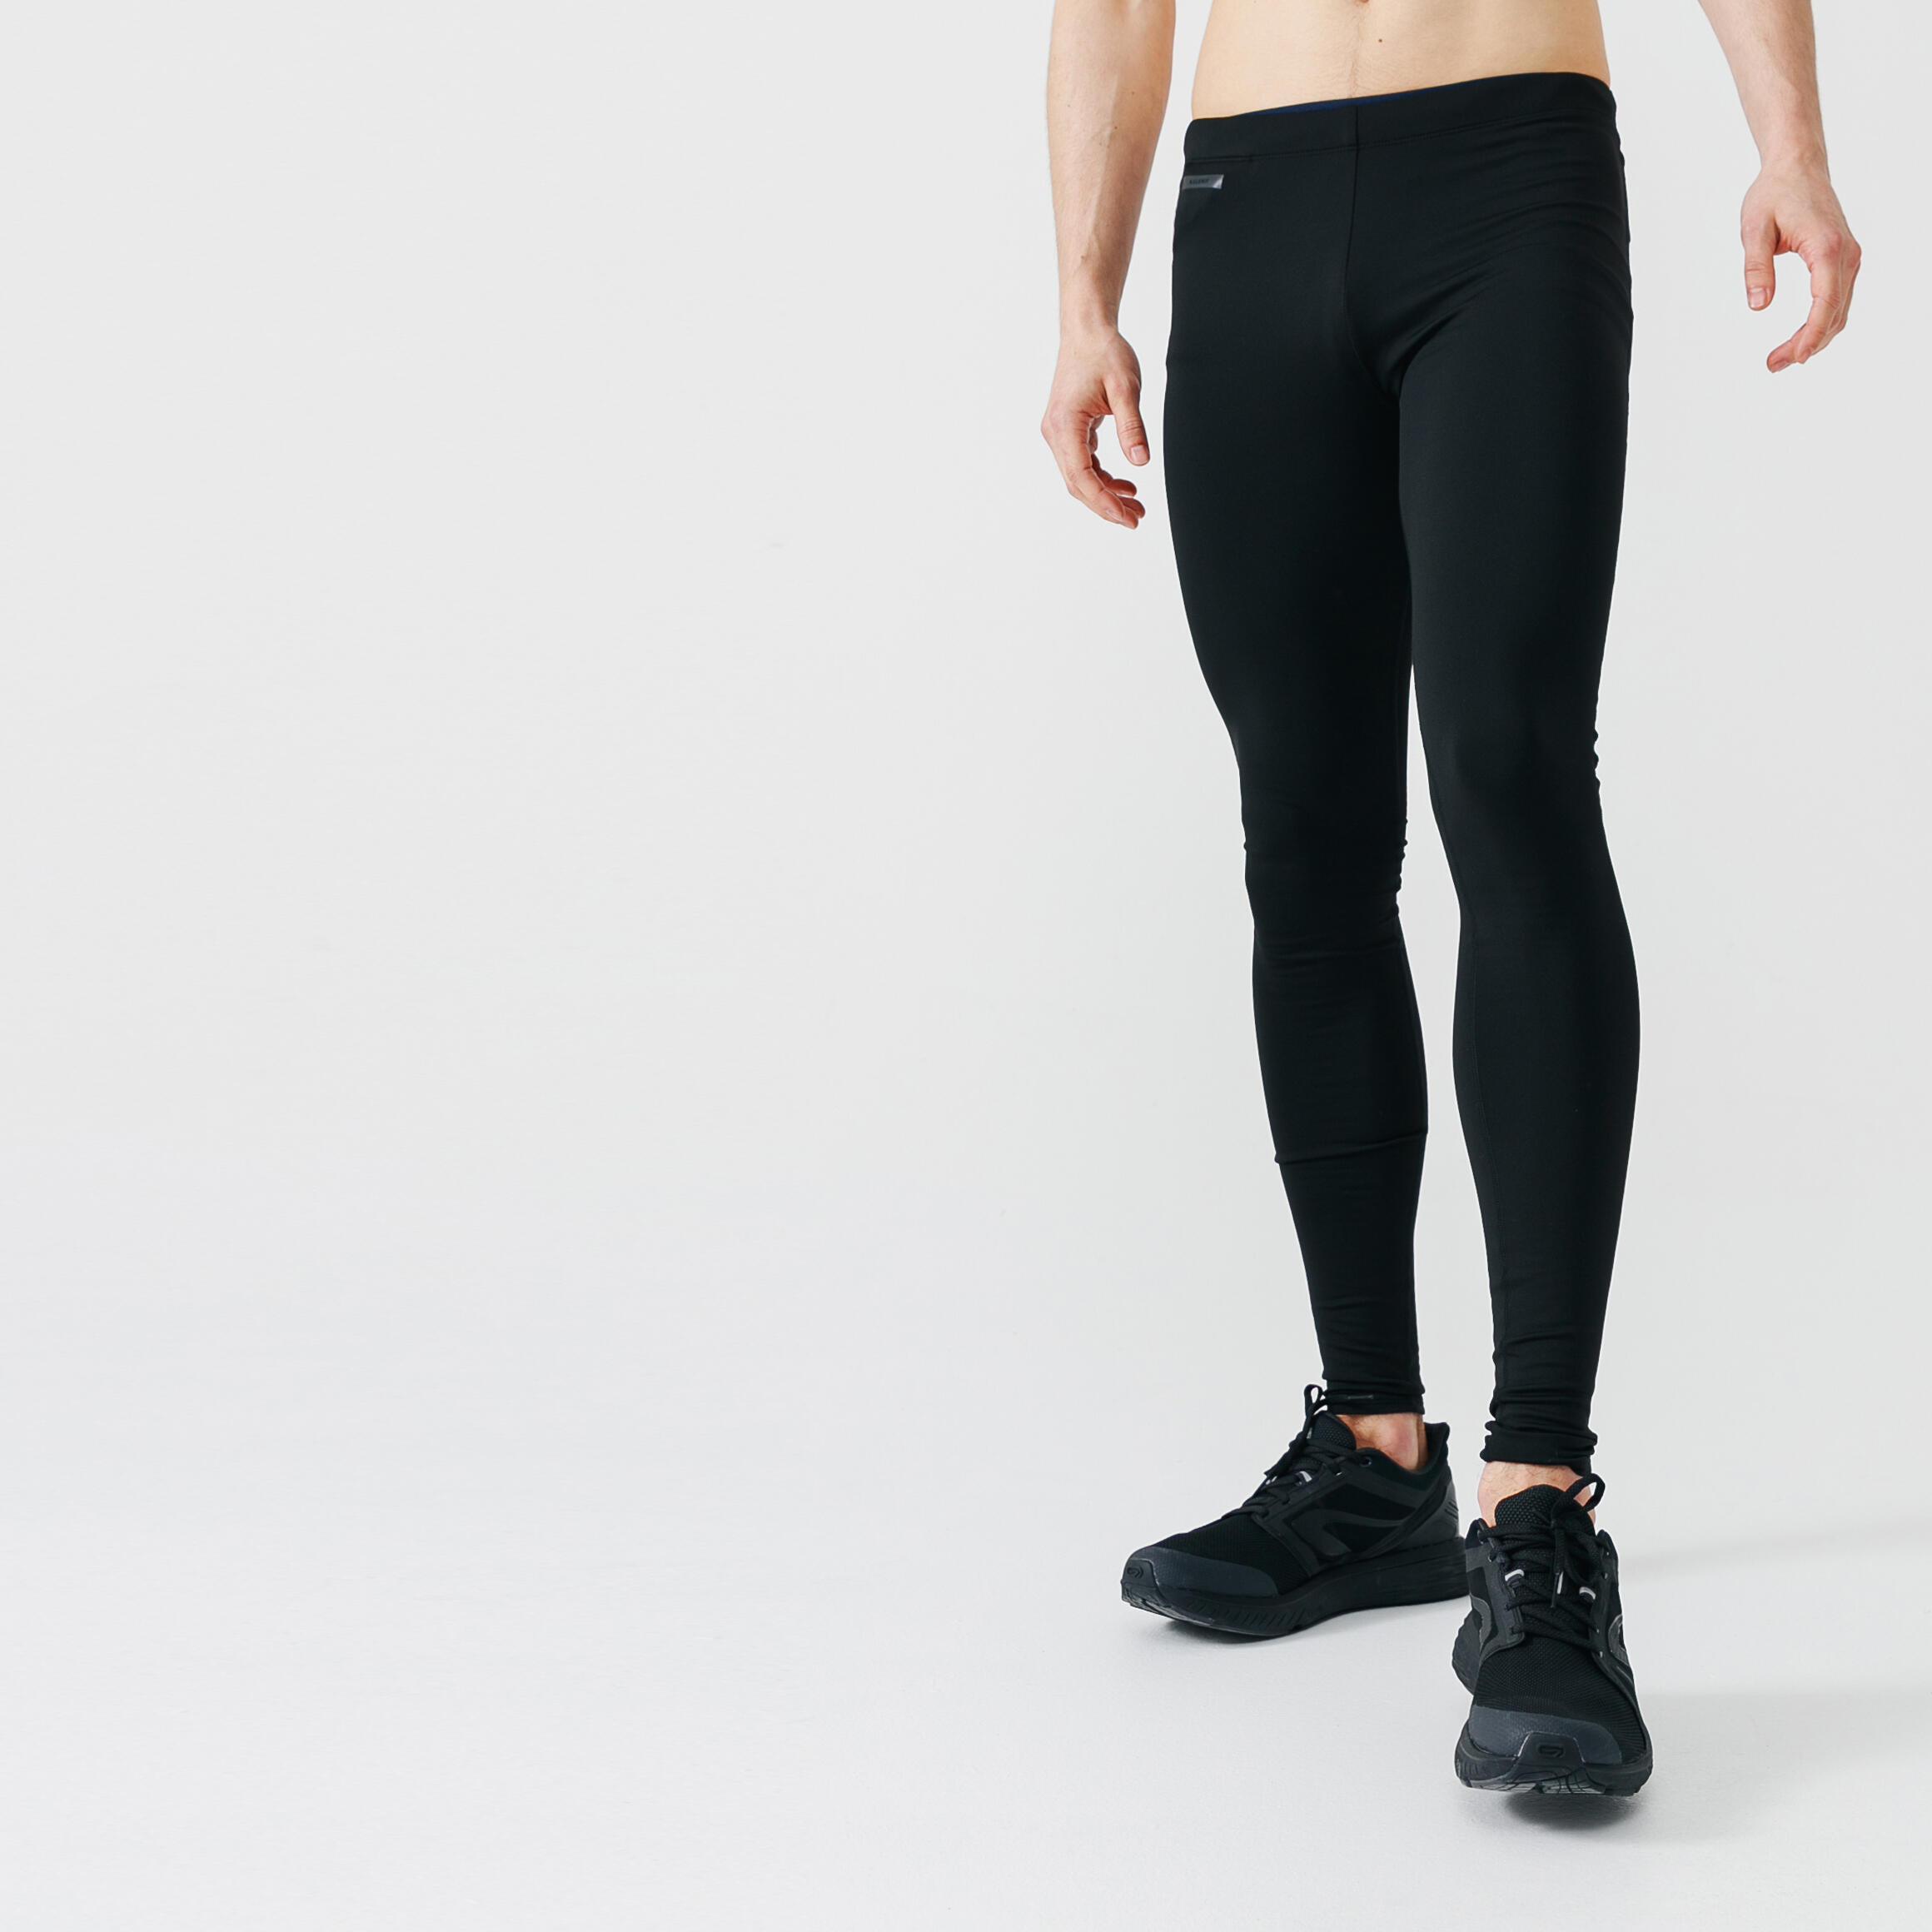 Buy Men Polyester SlimFit Gym Track Pants  Black Online  Decathlon